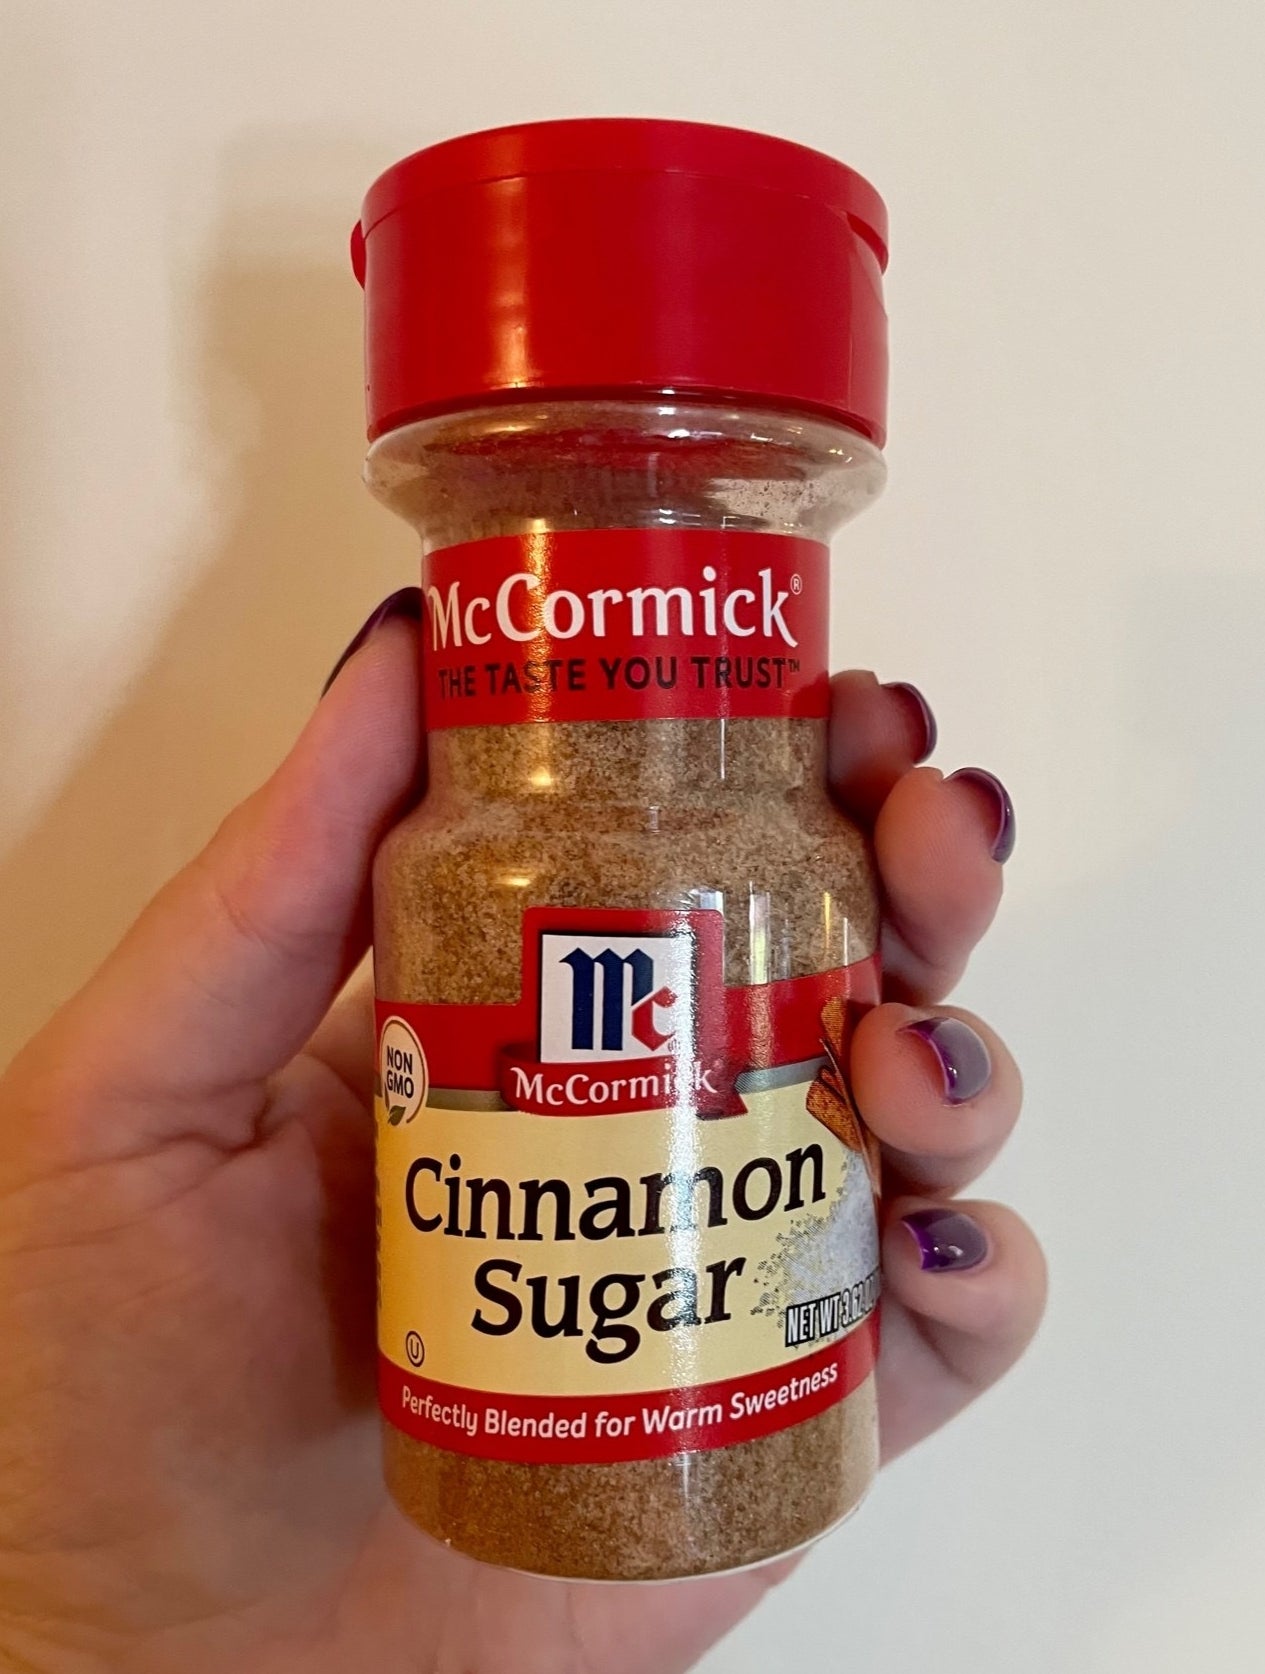 McCormick Cinnamon Sugar